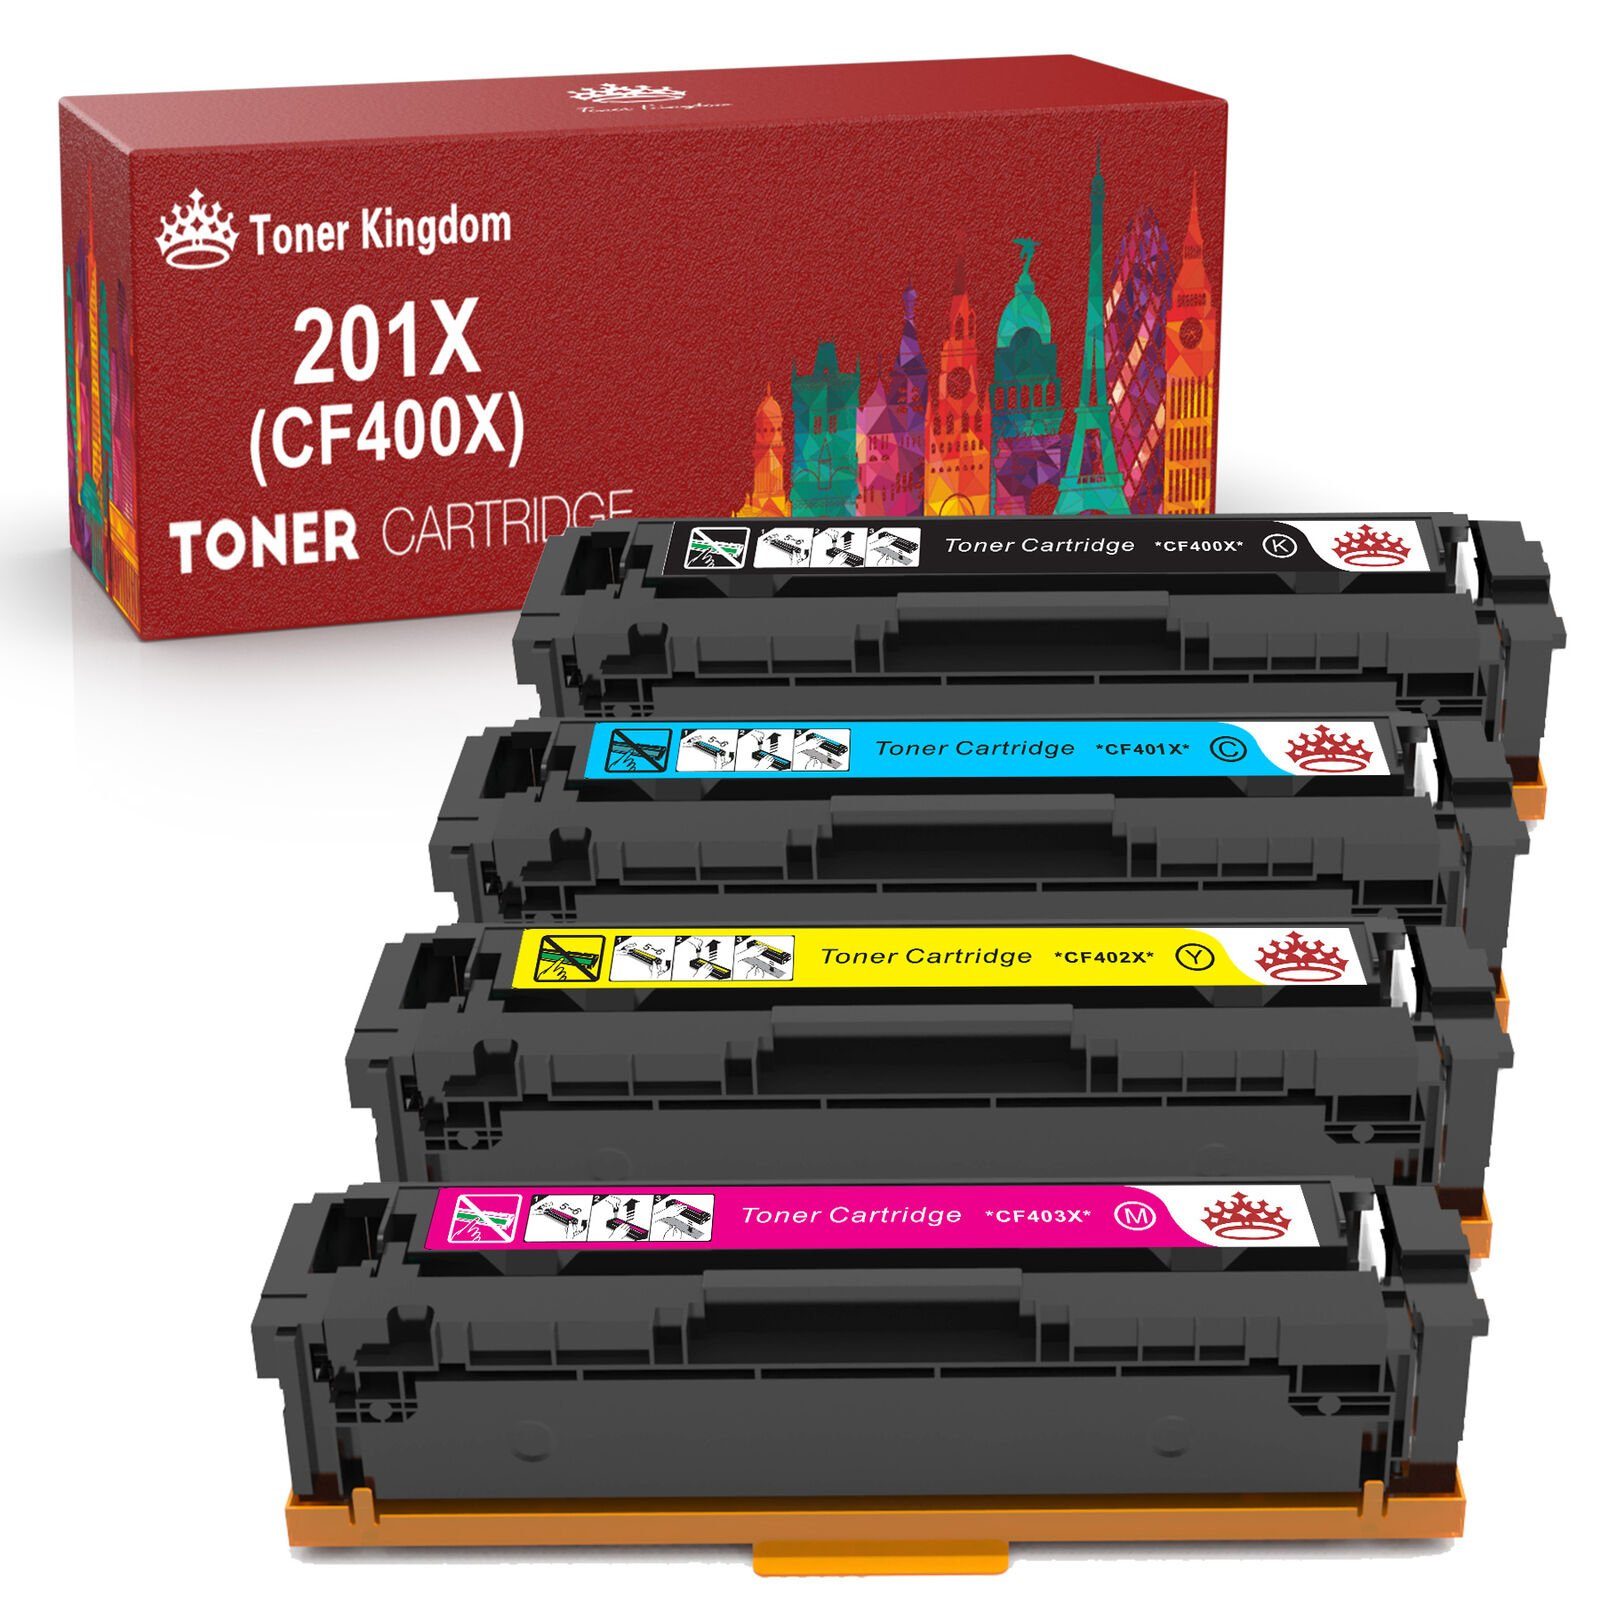 Toner Kingdom Tonerpatrone 4er für HP 201X CF400X, (Color LaserJet Pro M252dw M252n laserjet Pro MFP M277dw M277dw MFP M277n), M274n M250 M270 Series Drucker